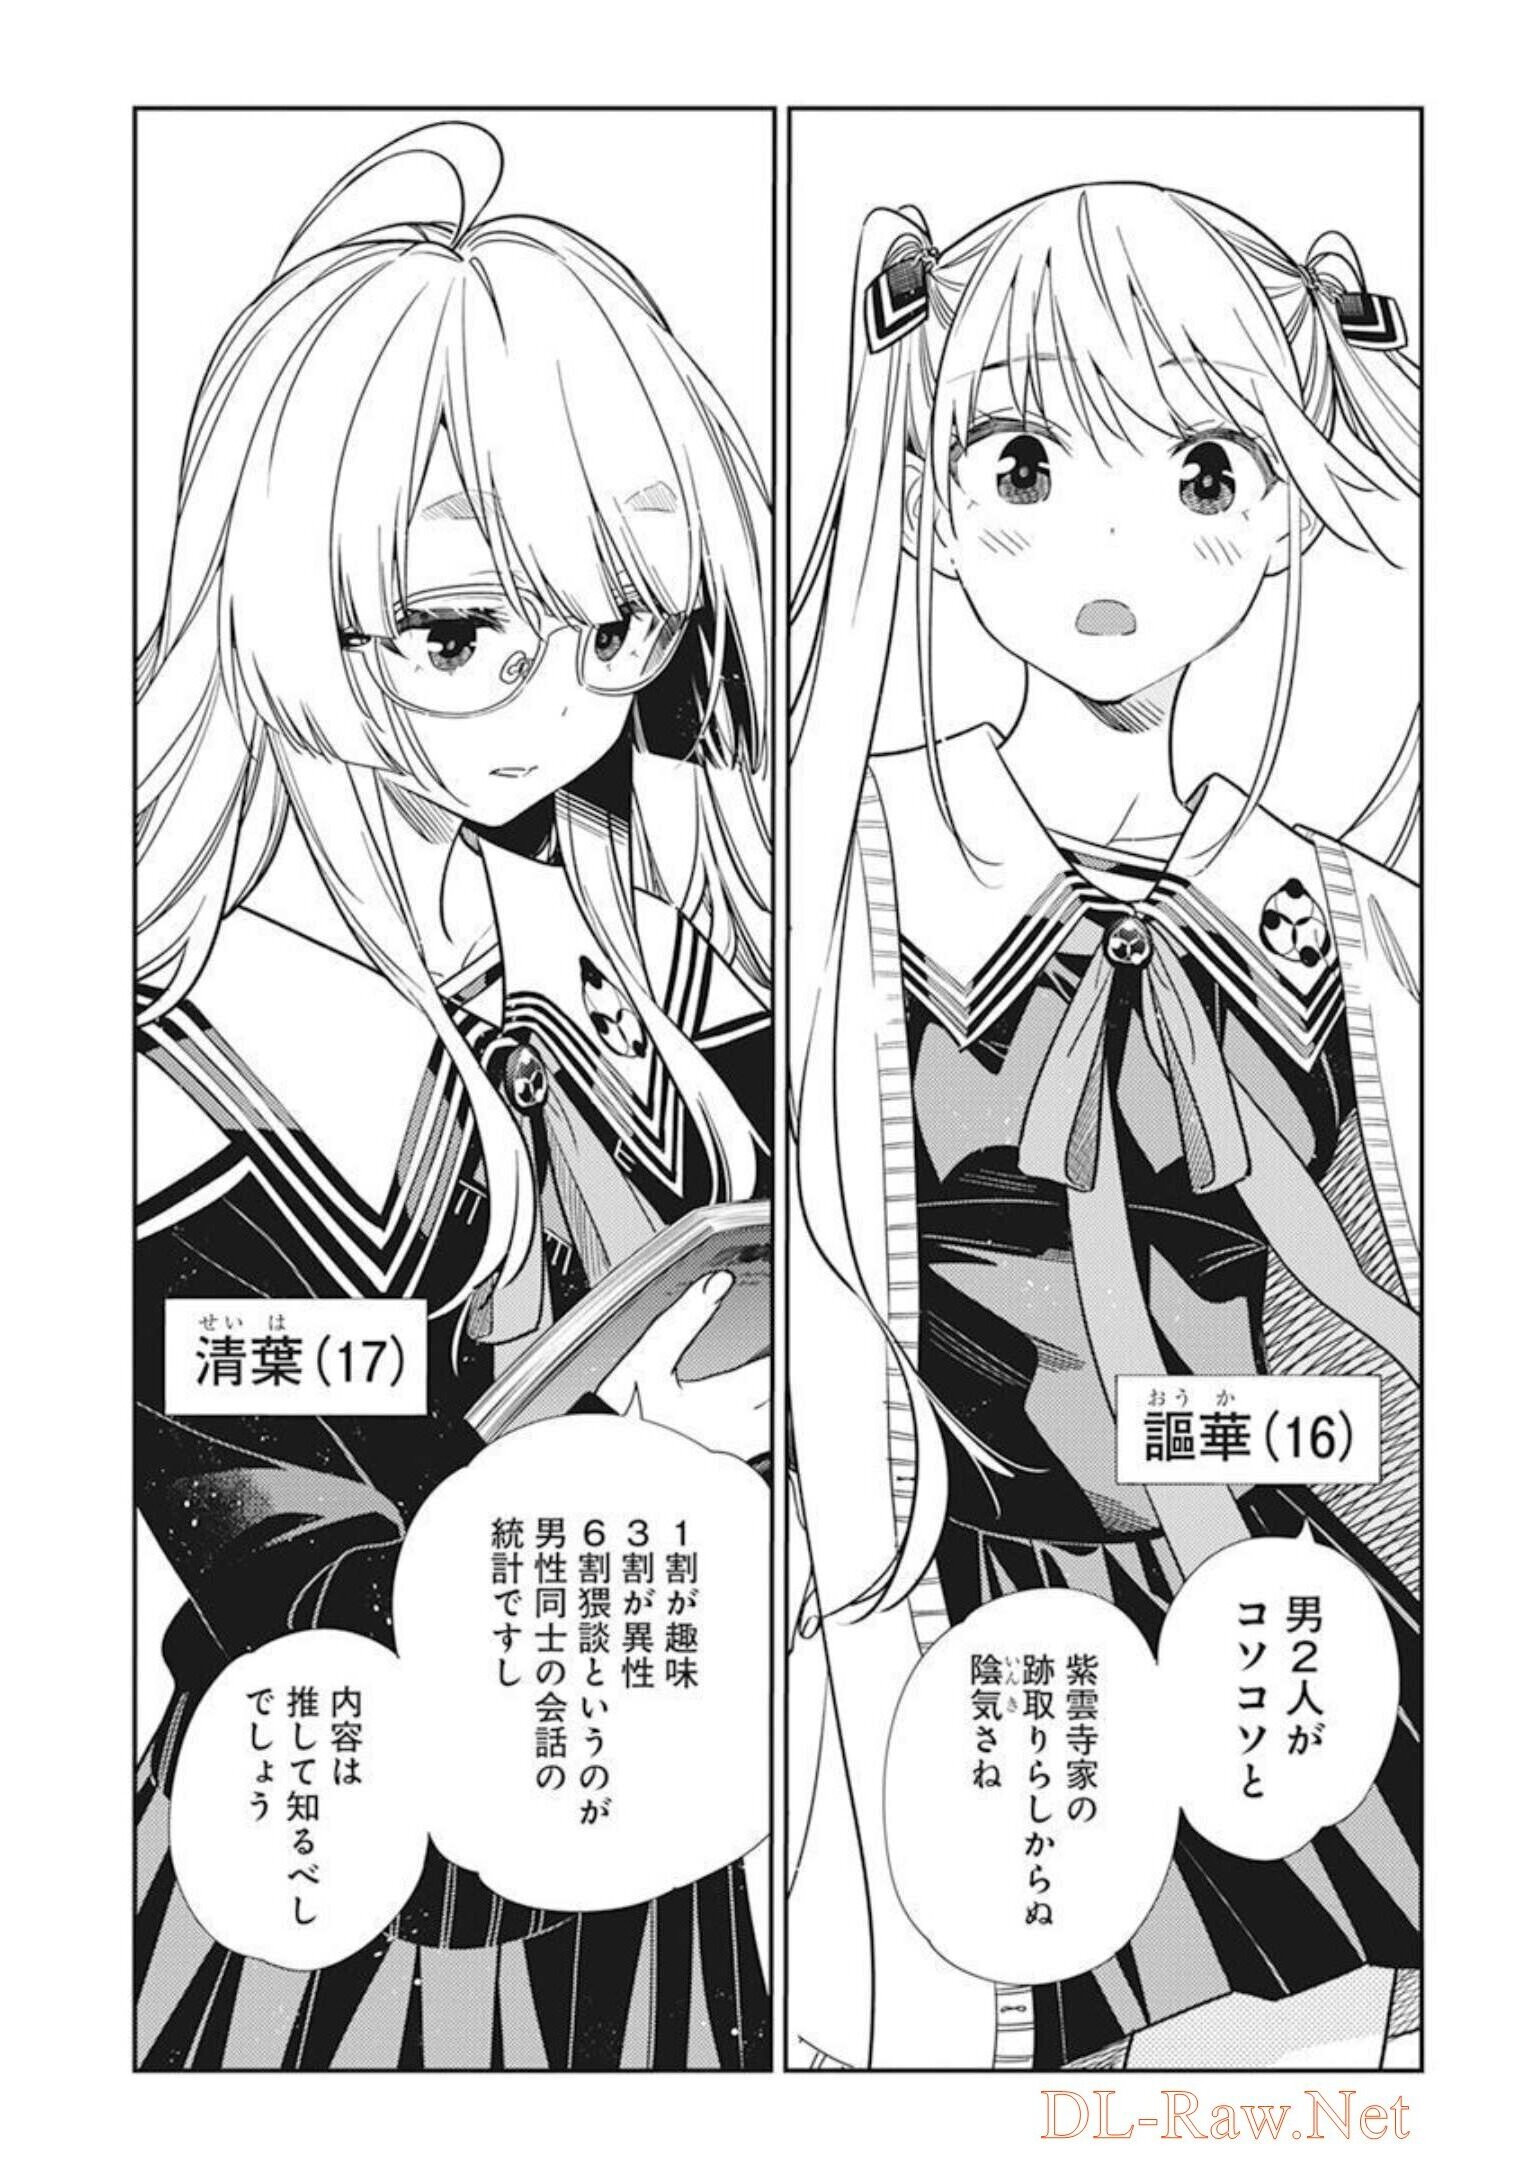 Shiunji-ke no Kodomotachi (Children of the Shiunji Family) - Chapter 01 - Page 8